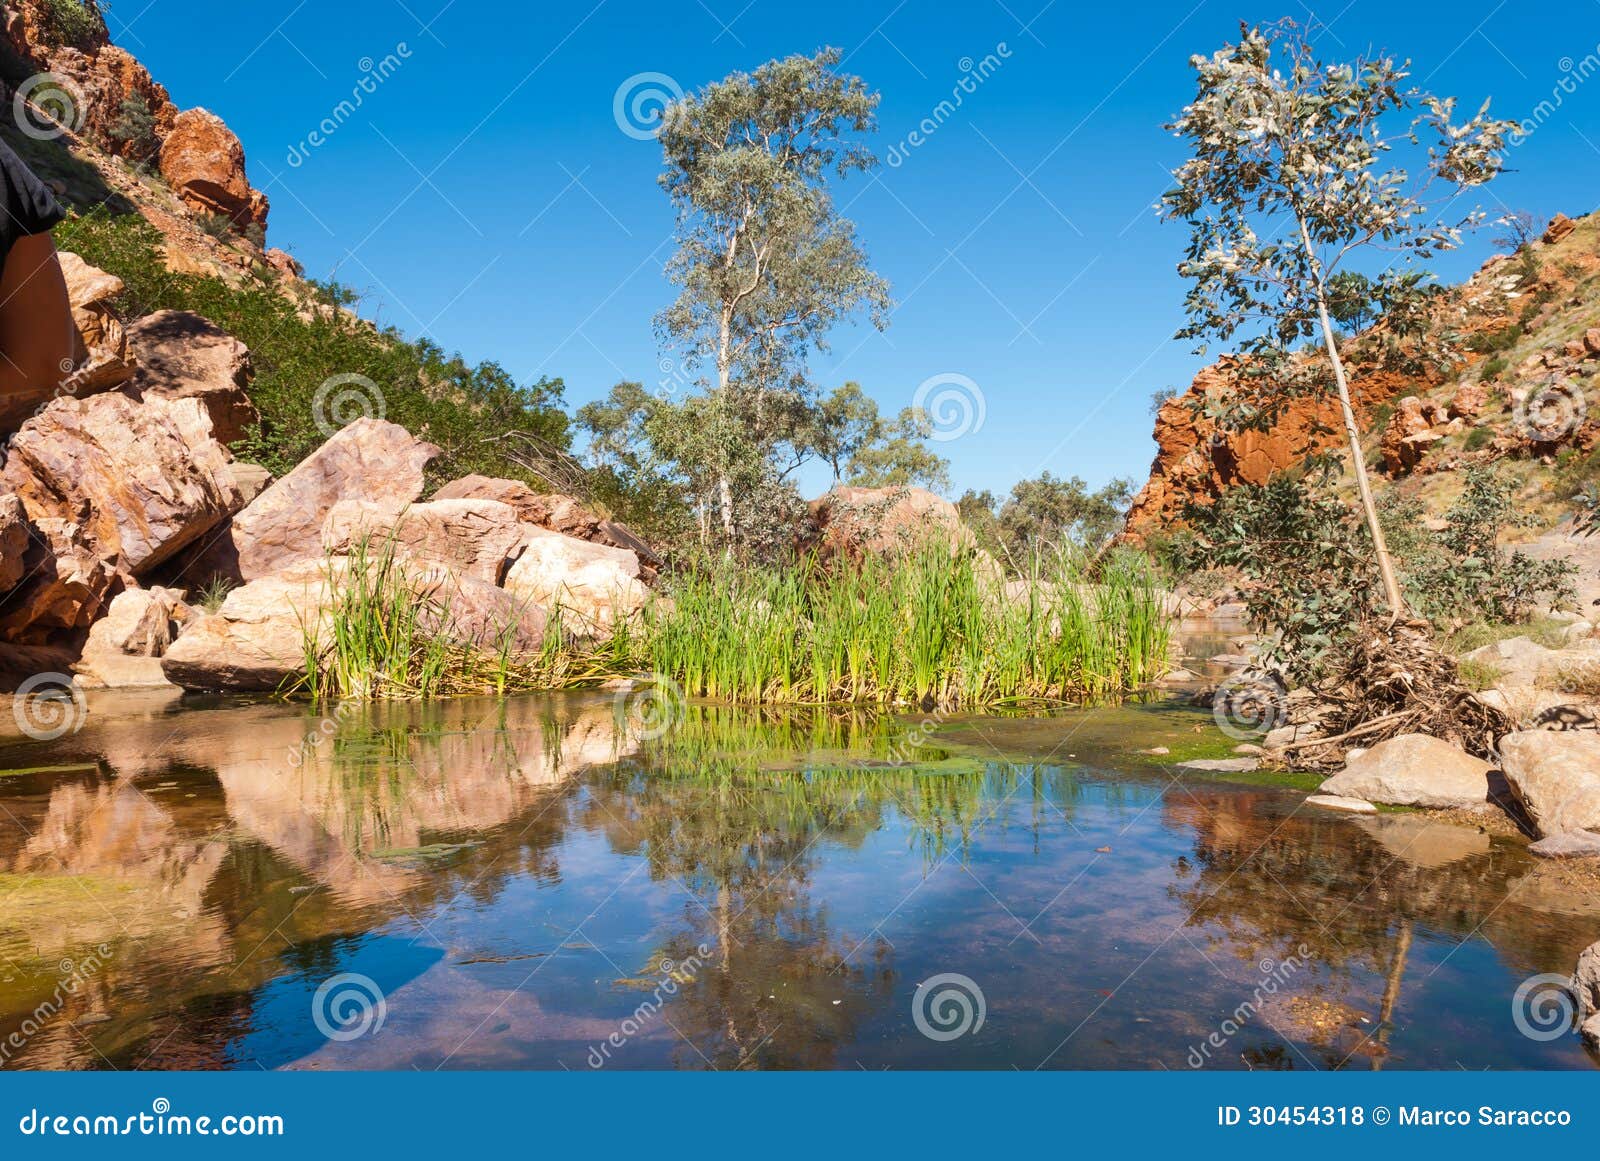 simpsons gap, macdonnell ranges, australia